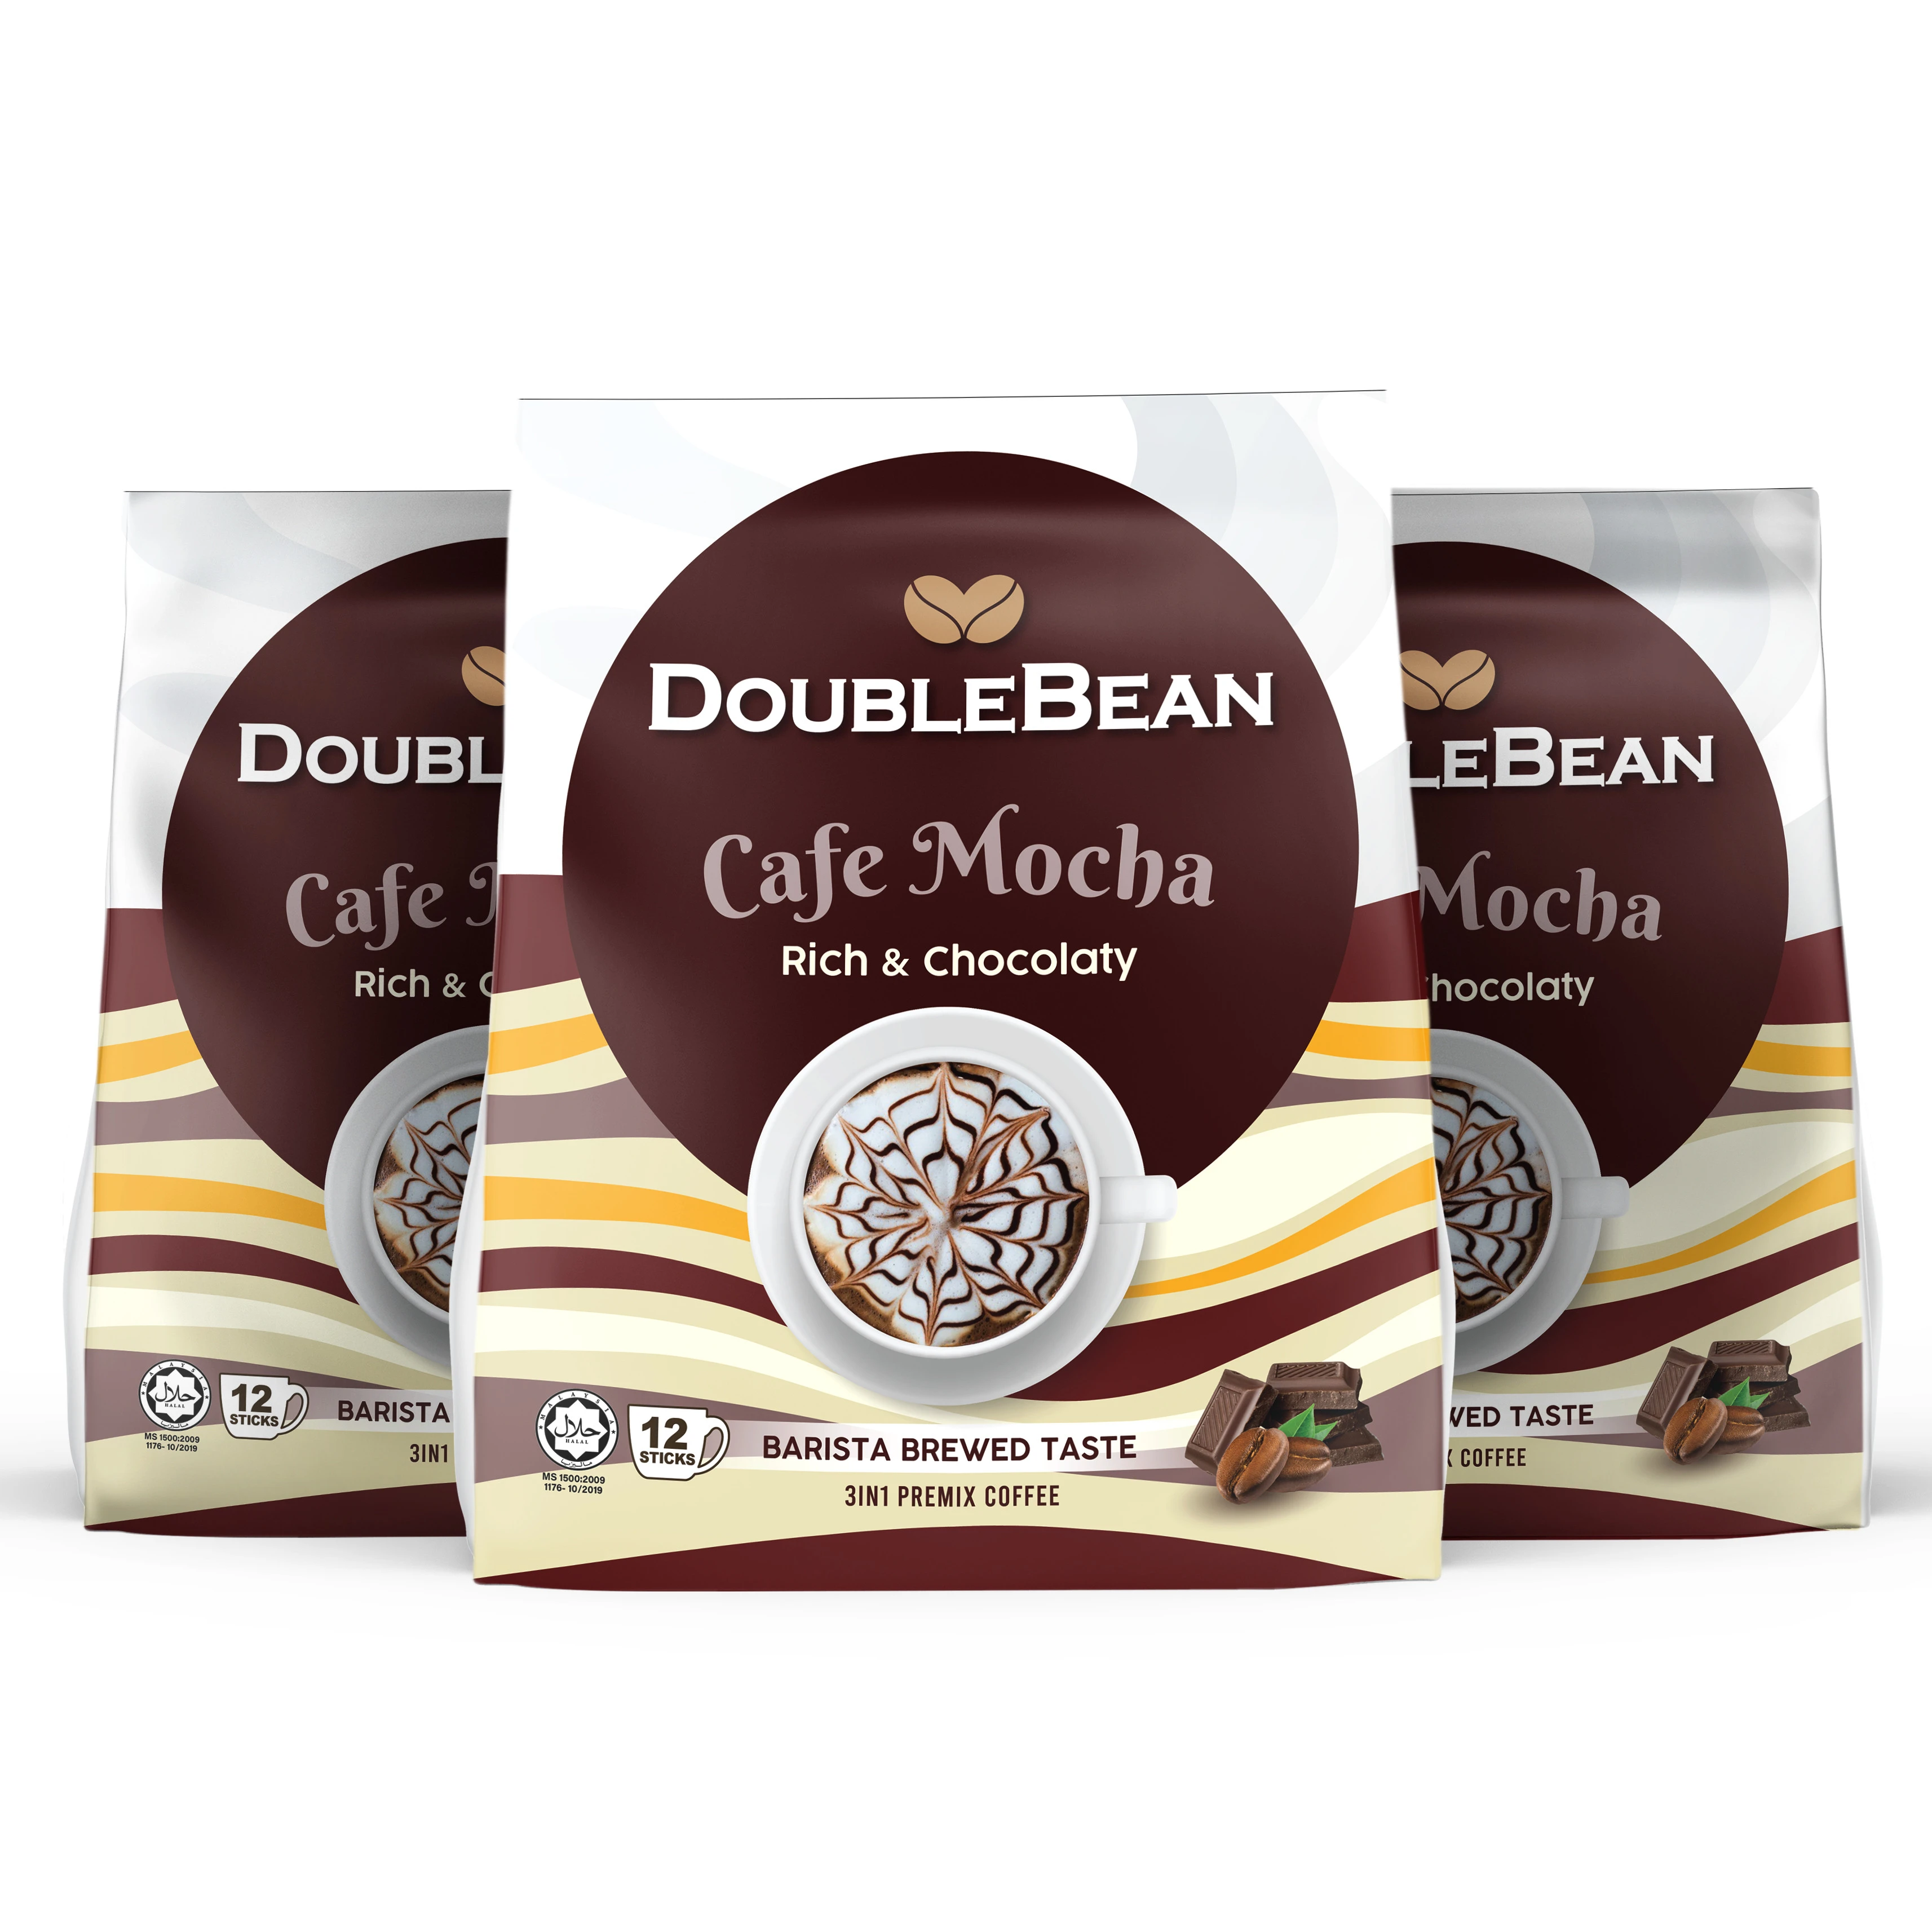 DOUBLEBEAN Cafe Mocha 12 sachets x 25g (300g) HALAL Premium Cocoa Coffee Premix Powder High Quality Malaysia Products